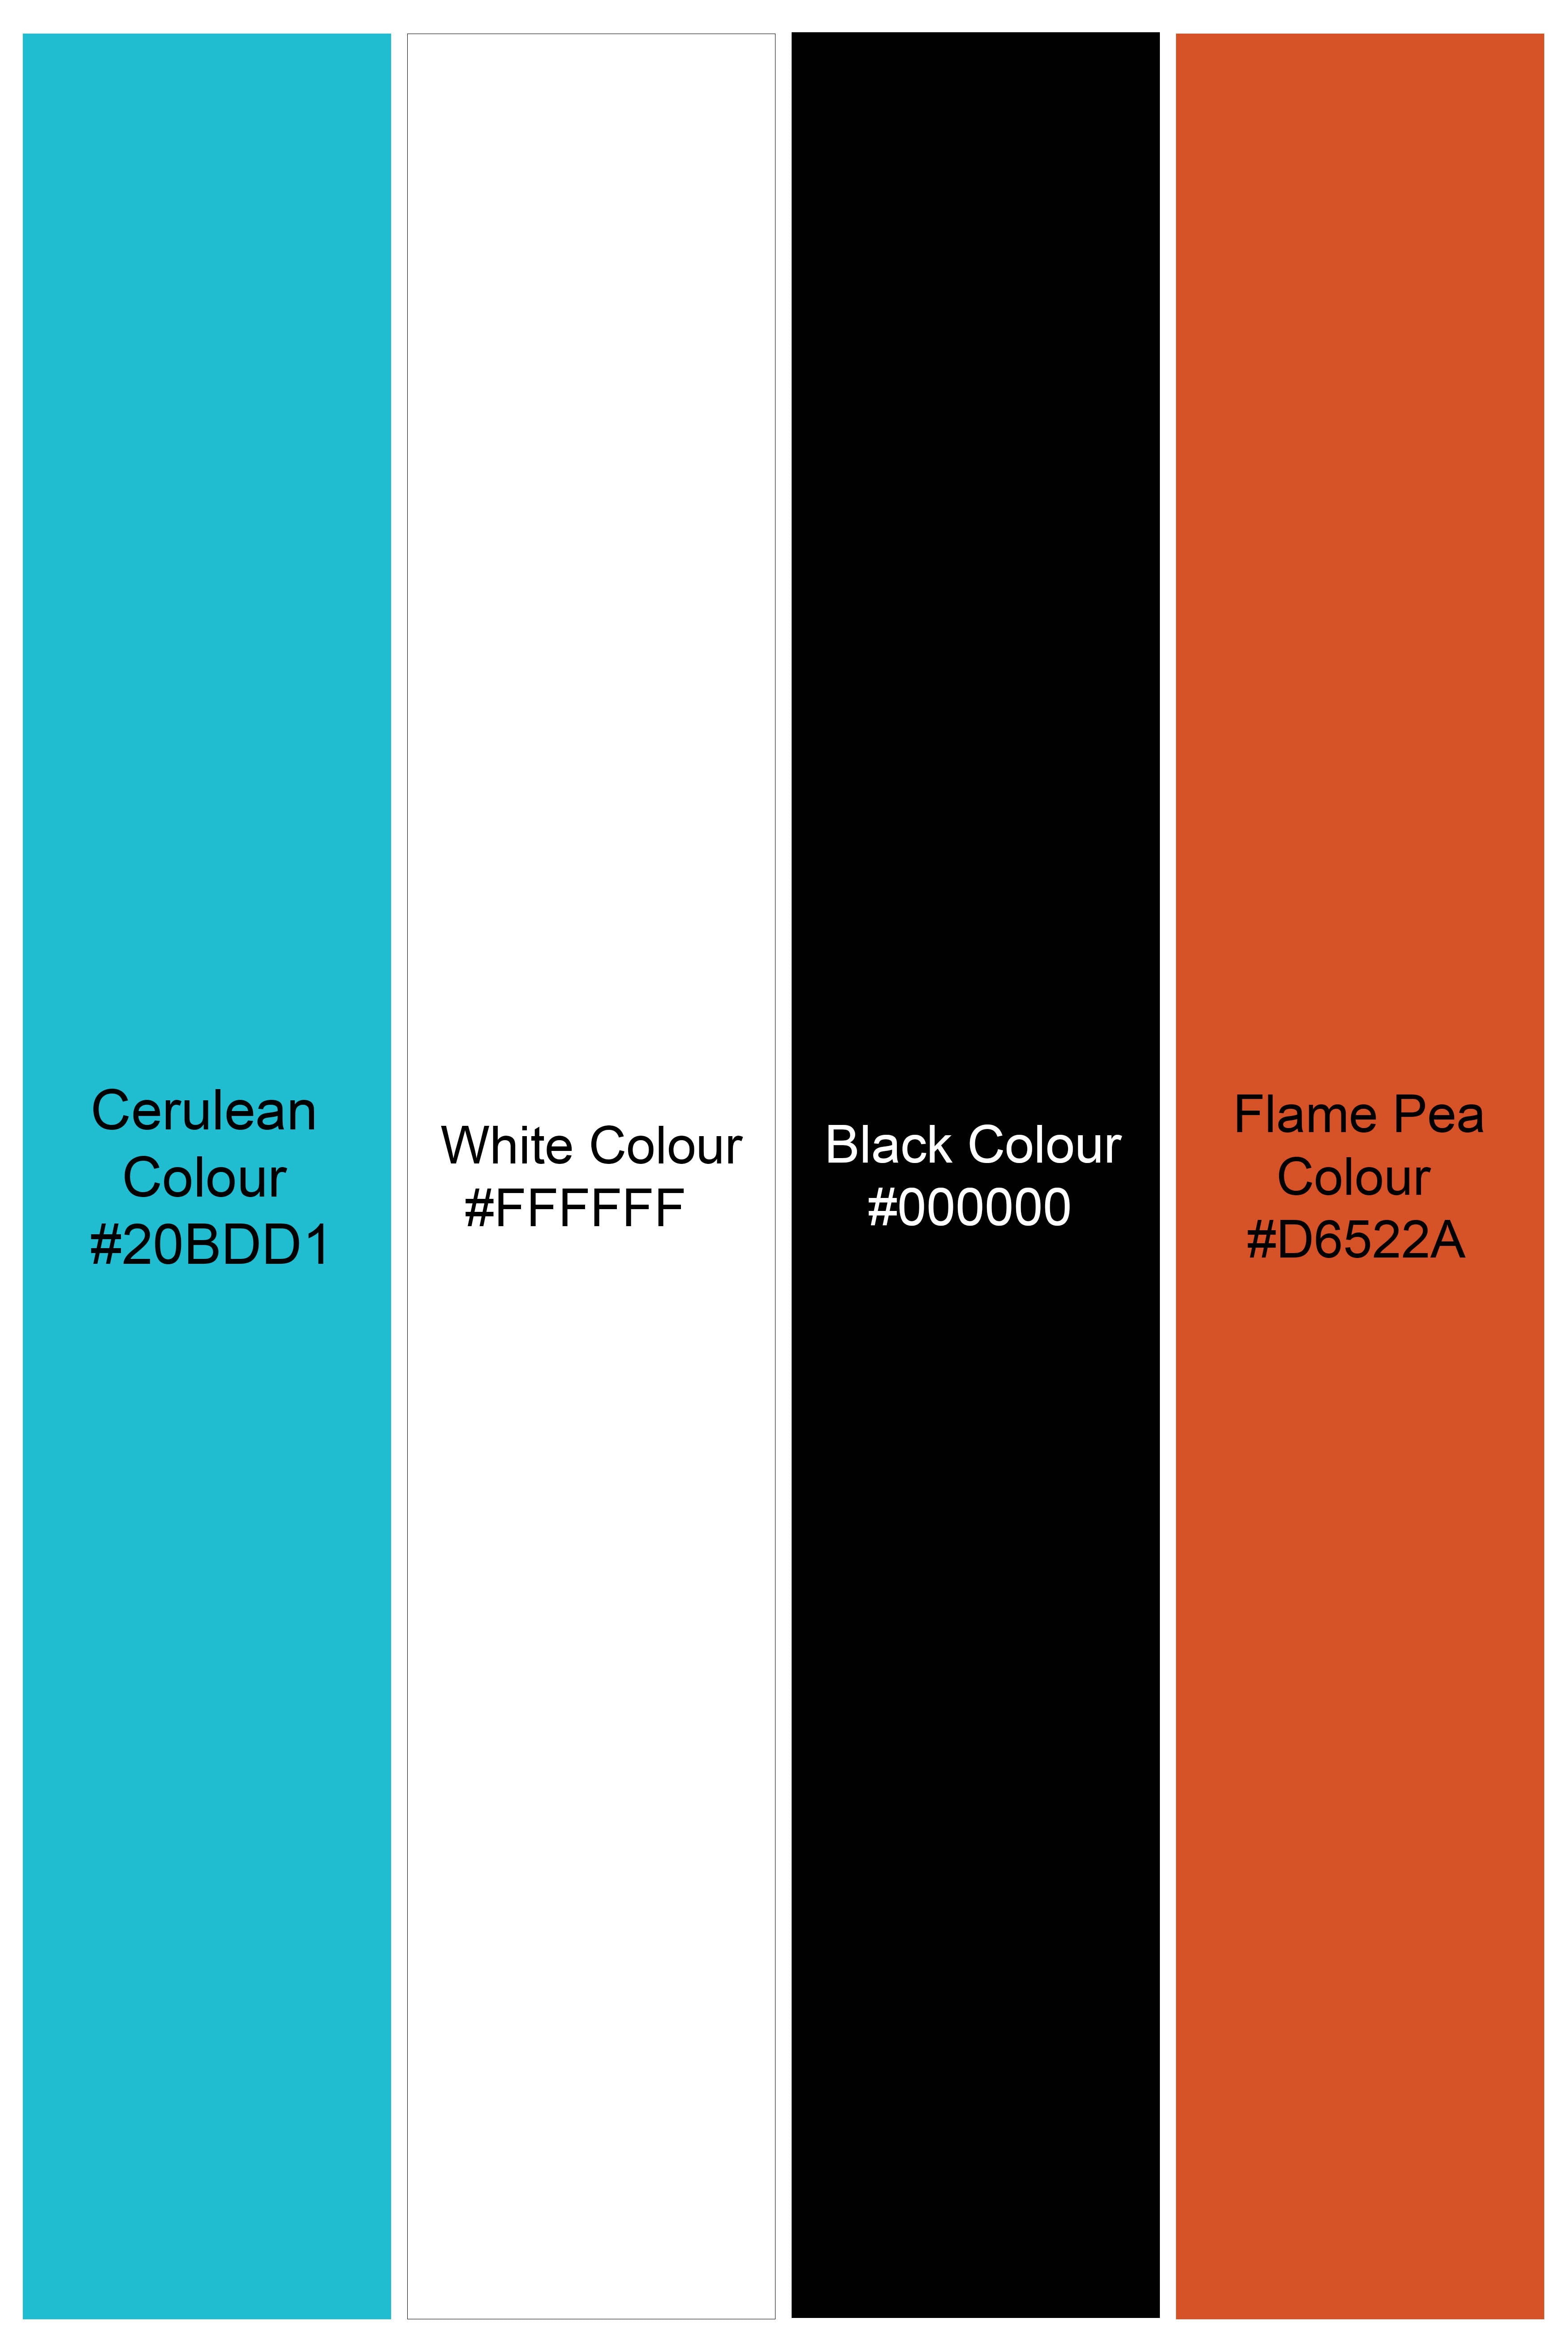 Jade Black and Flame Pea Orange Multicolour Zebra Printed Subtle Sheen Super Soft Premium Cotton Designer Shirt 12188-CC-BLK-SS-38, 12188-CC-BLK-SS-39, 12188-CC-BLK-SS-40, 12188-CC-BLK-SS-42, 12188-CC-BLK-SS-44, 12188-CC-BLK-SS-46, 12188-CC-BLK-SS-48, 12188-CC-BLK-SS-50, 12188-CC-BLK-SS-5212188-CC-BLK-SS-44, 12188-CC-BLK-SS-46, 12188-CC-BLK-SS-48, 12188-CC-BLK-SS-50, 12188-CC-BLK-SS-52